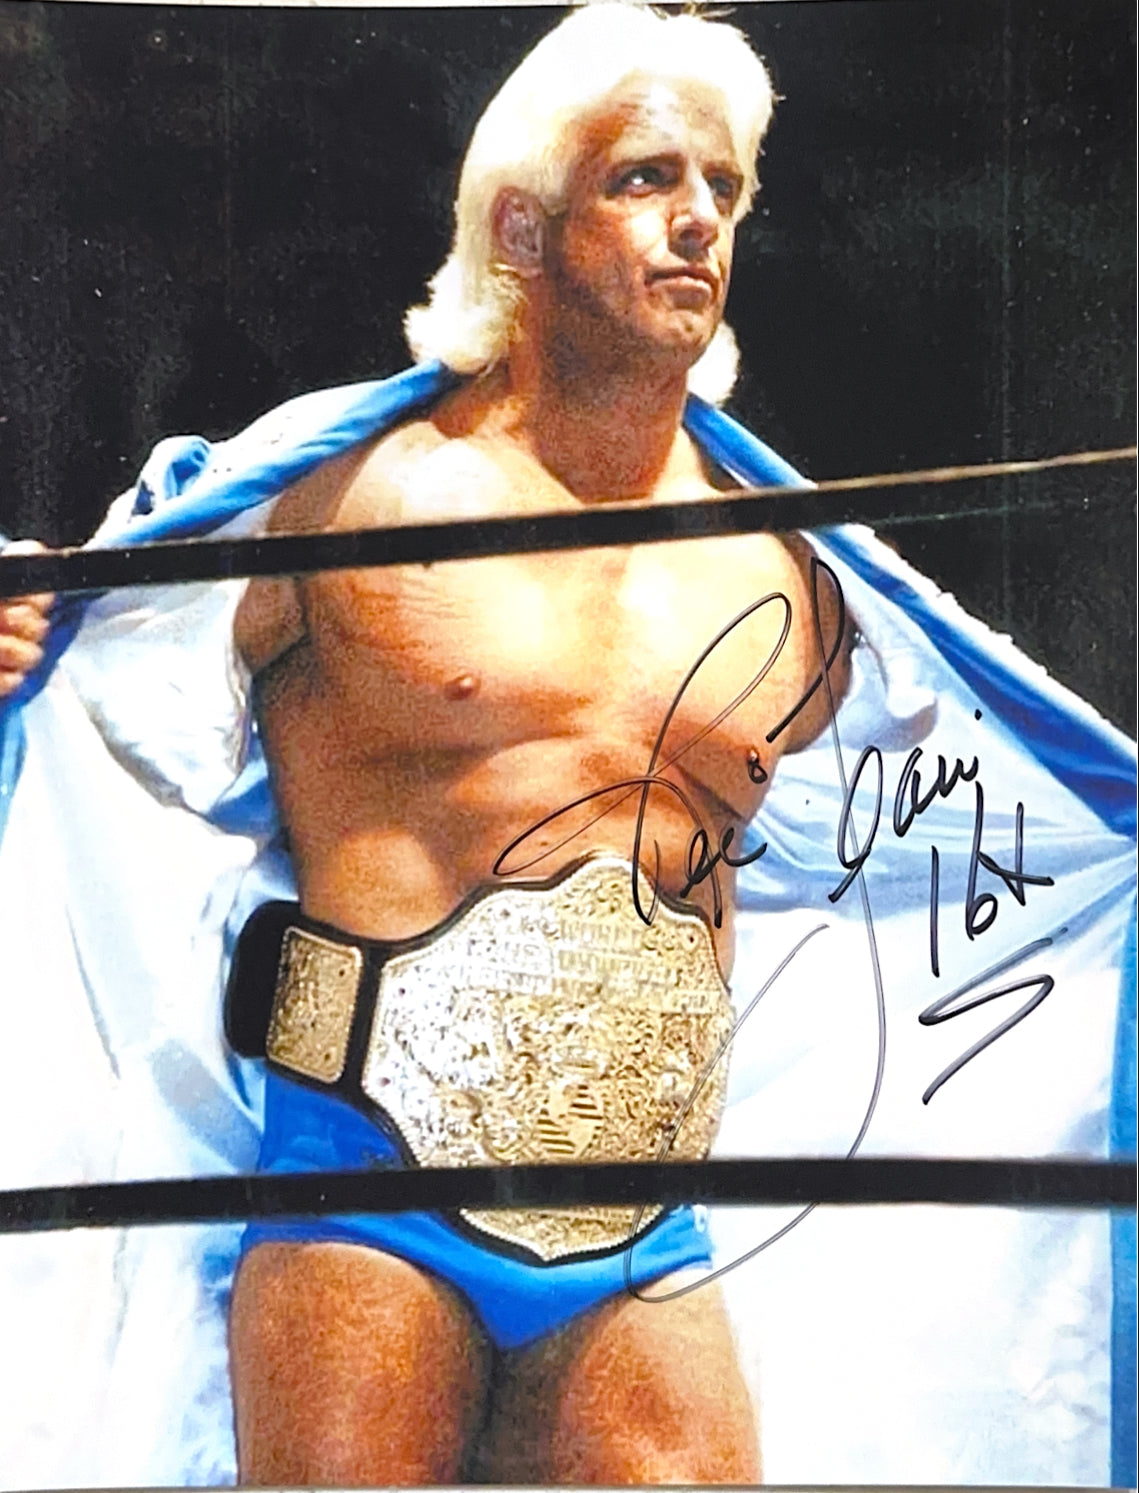 Autographed Wrestling Champion Belt Photo